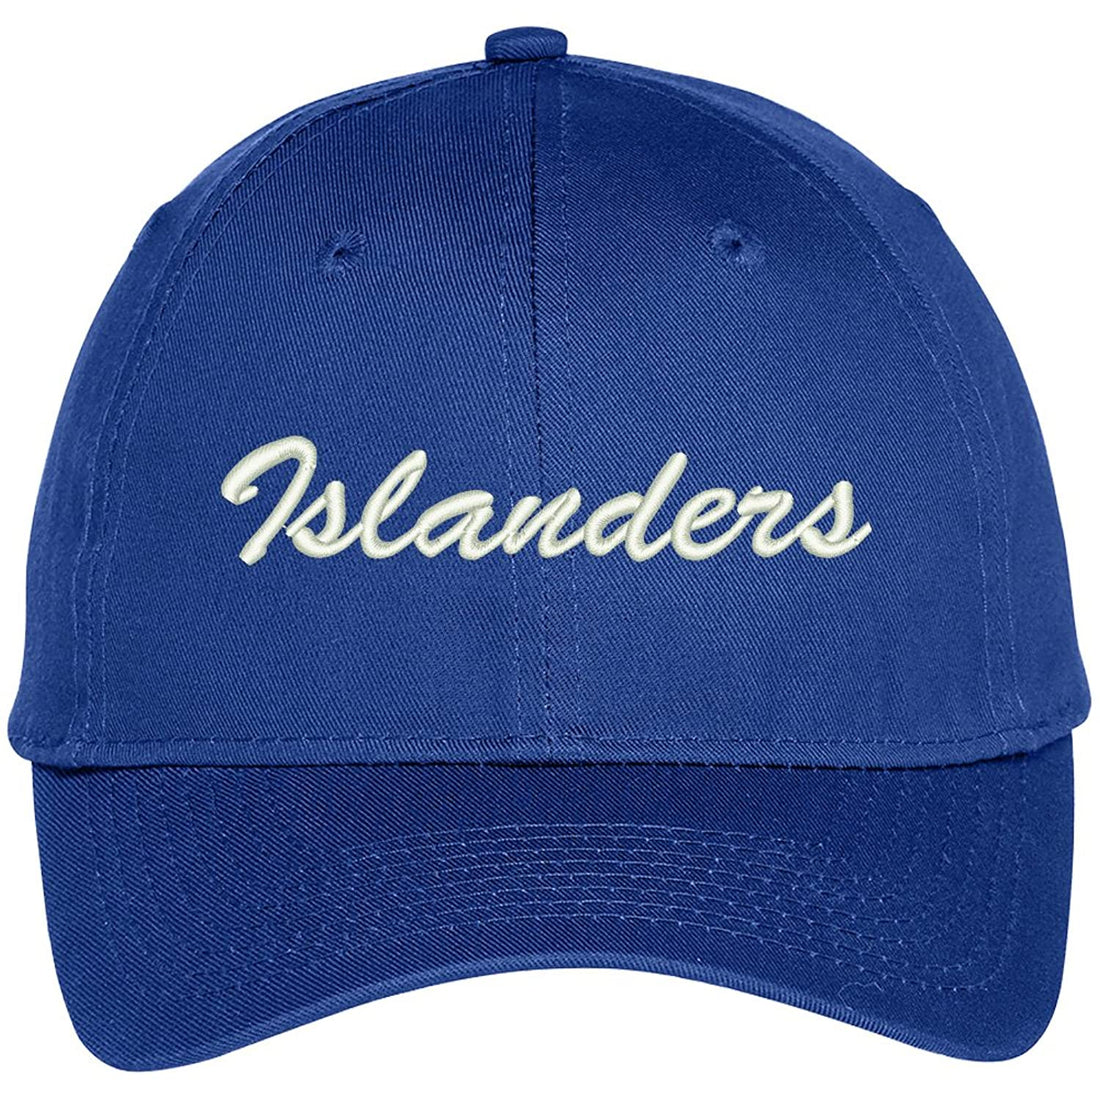 Trendy Apparel Shop Islanders Embroidered Precurved Adjustable Cap